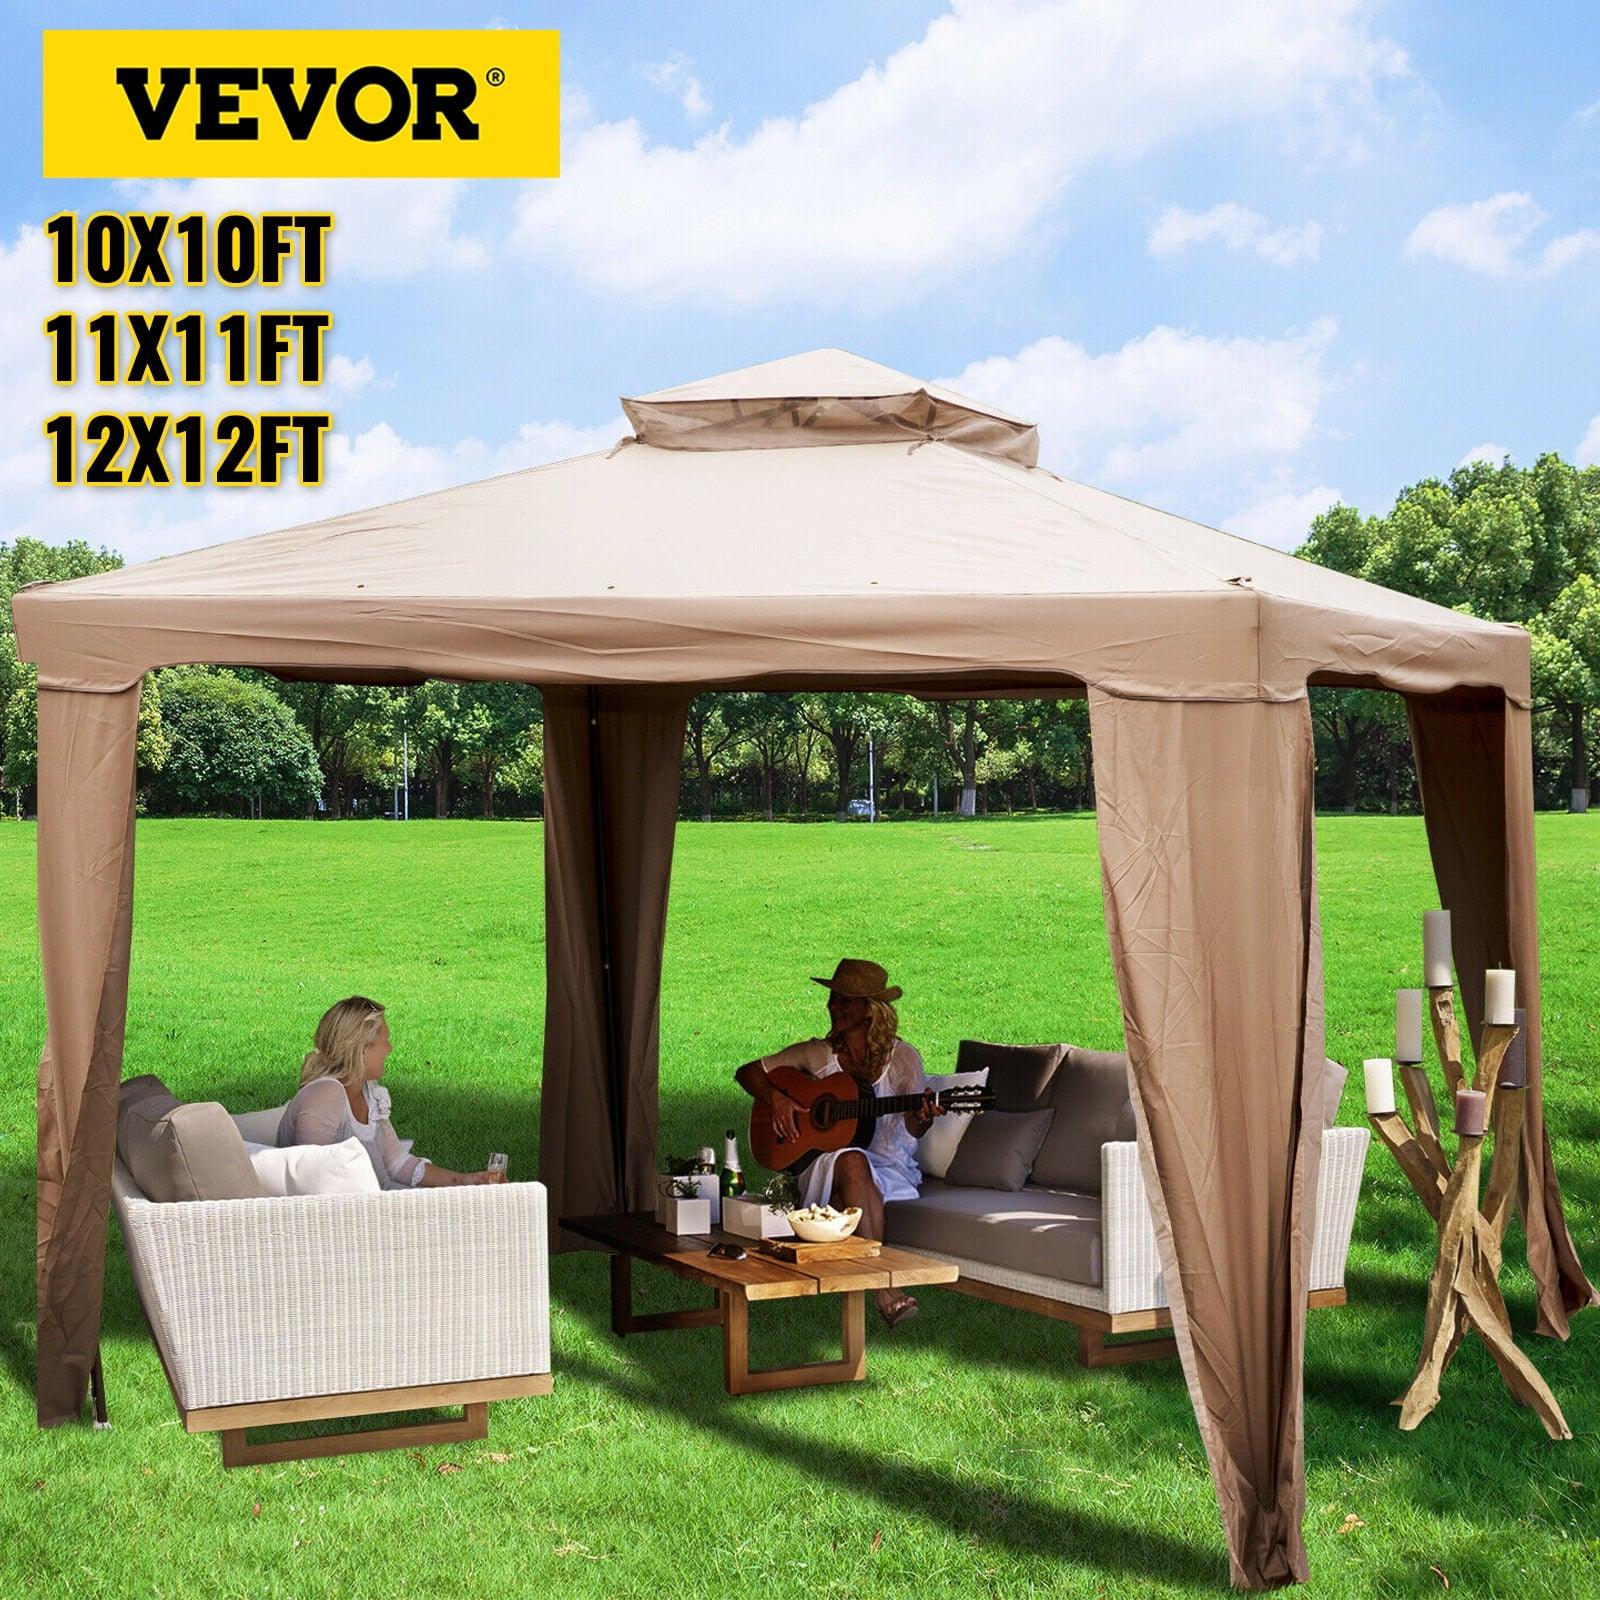 Balerz VEVOR Outdoor Gazebo Canopy Tent with Netting Sandbag Patio Garden Shade Awning Shelter Picnic Wedding Party Camping Tent